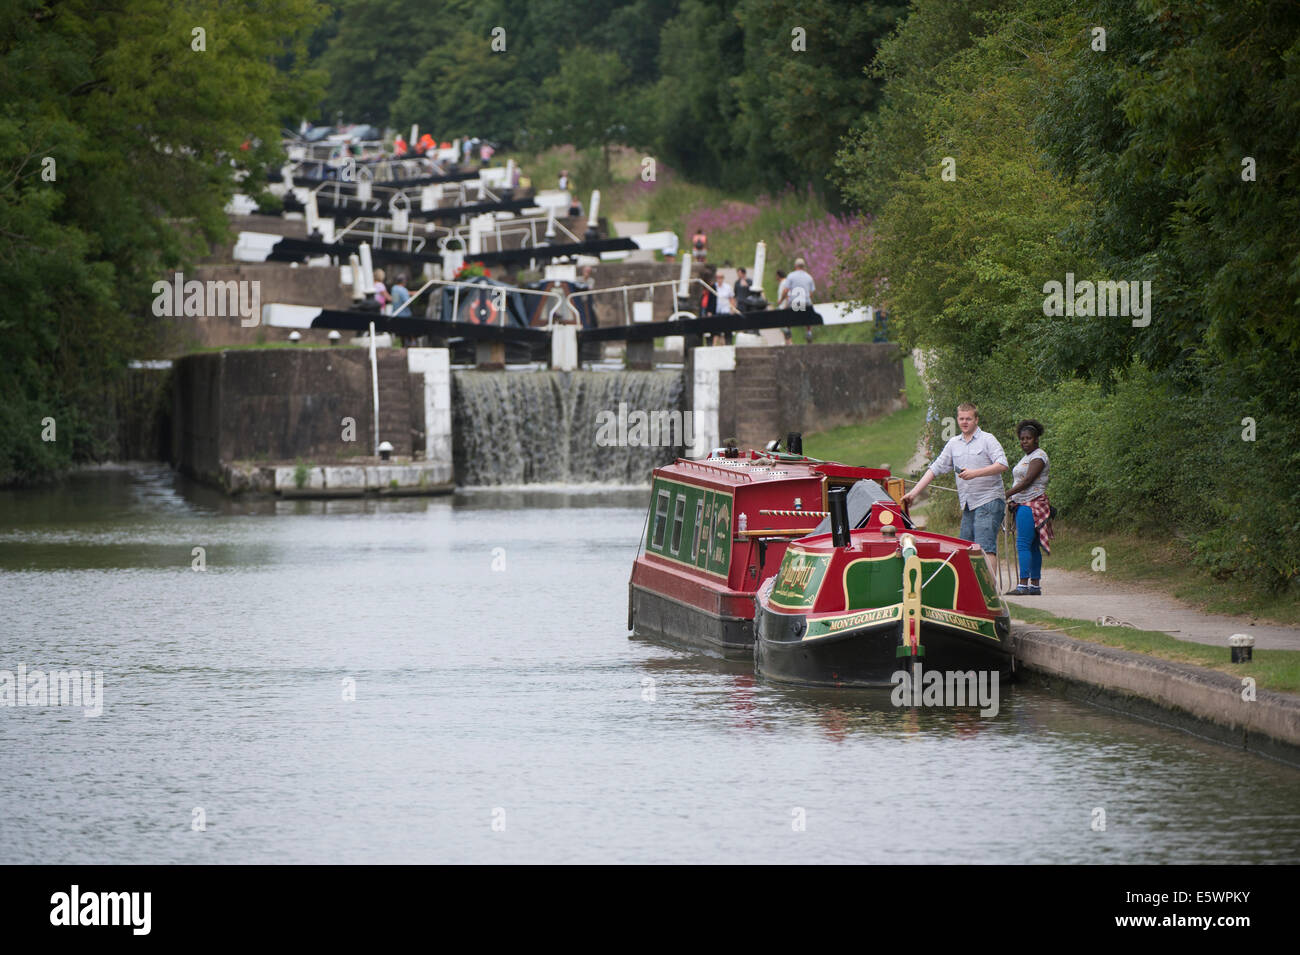 A Hatton Narrowboats écluses sur le Canal Grand Union. Hatton, Warwickshire, Angleterre Banque D'Images